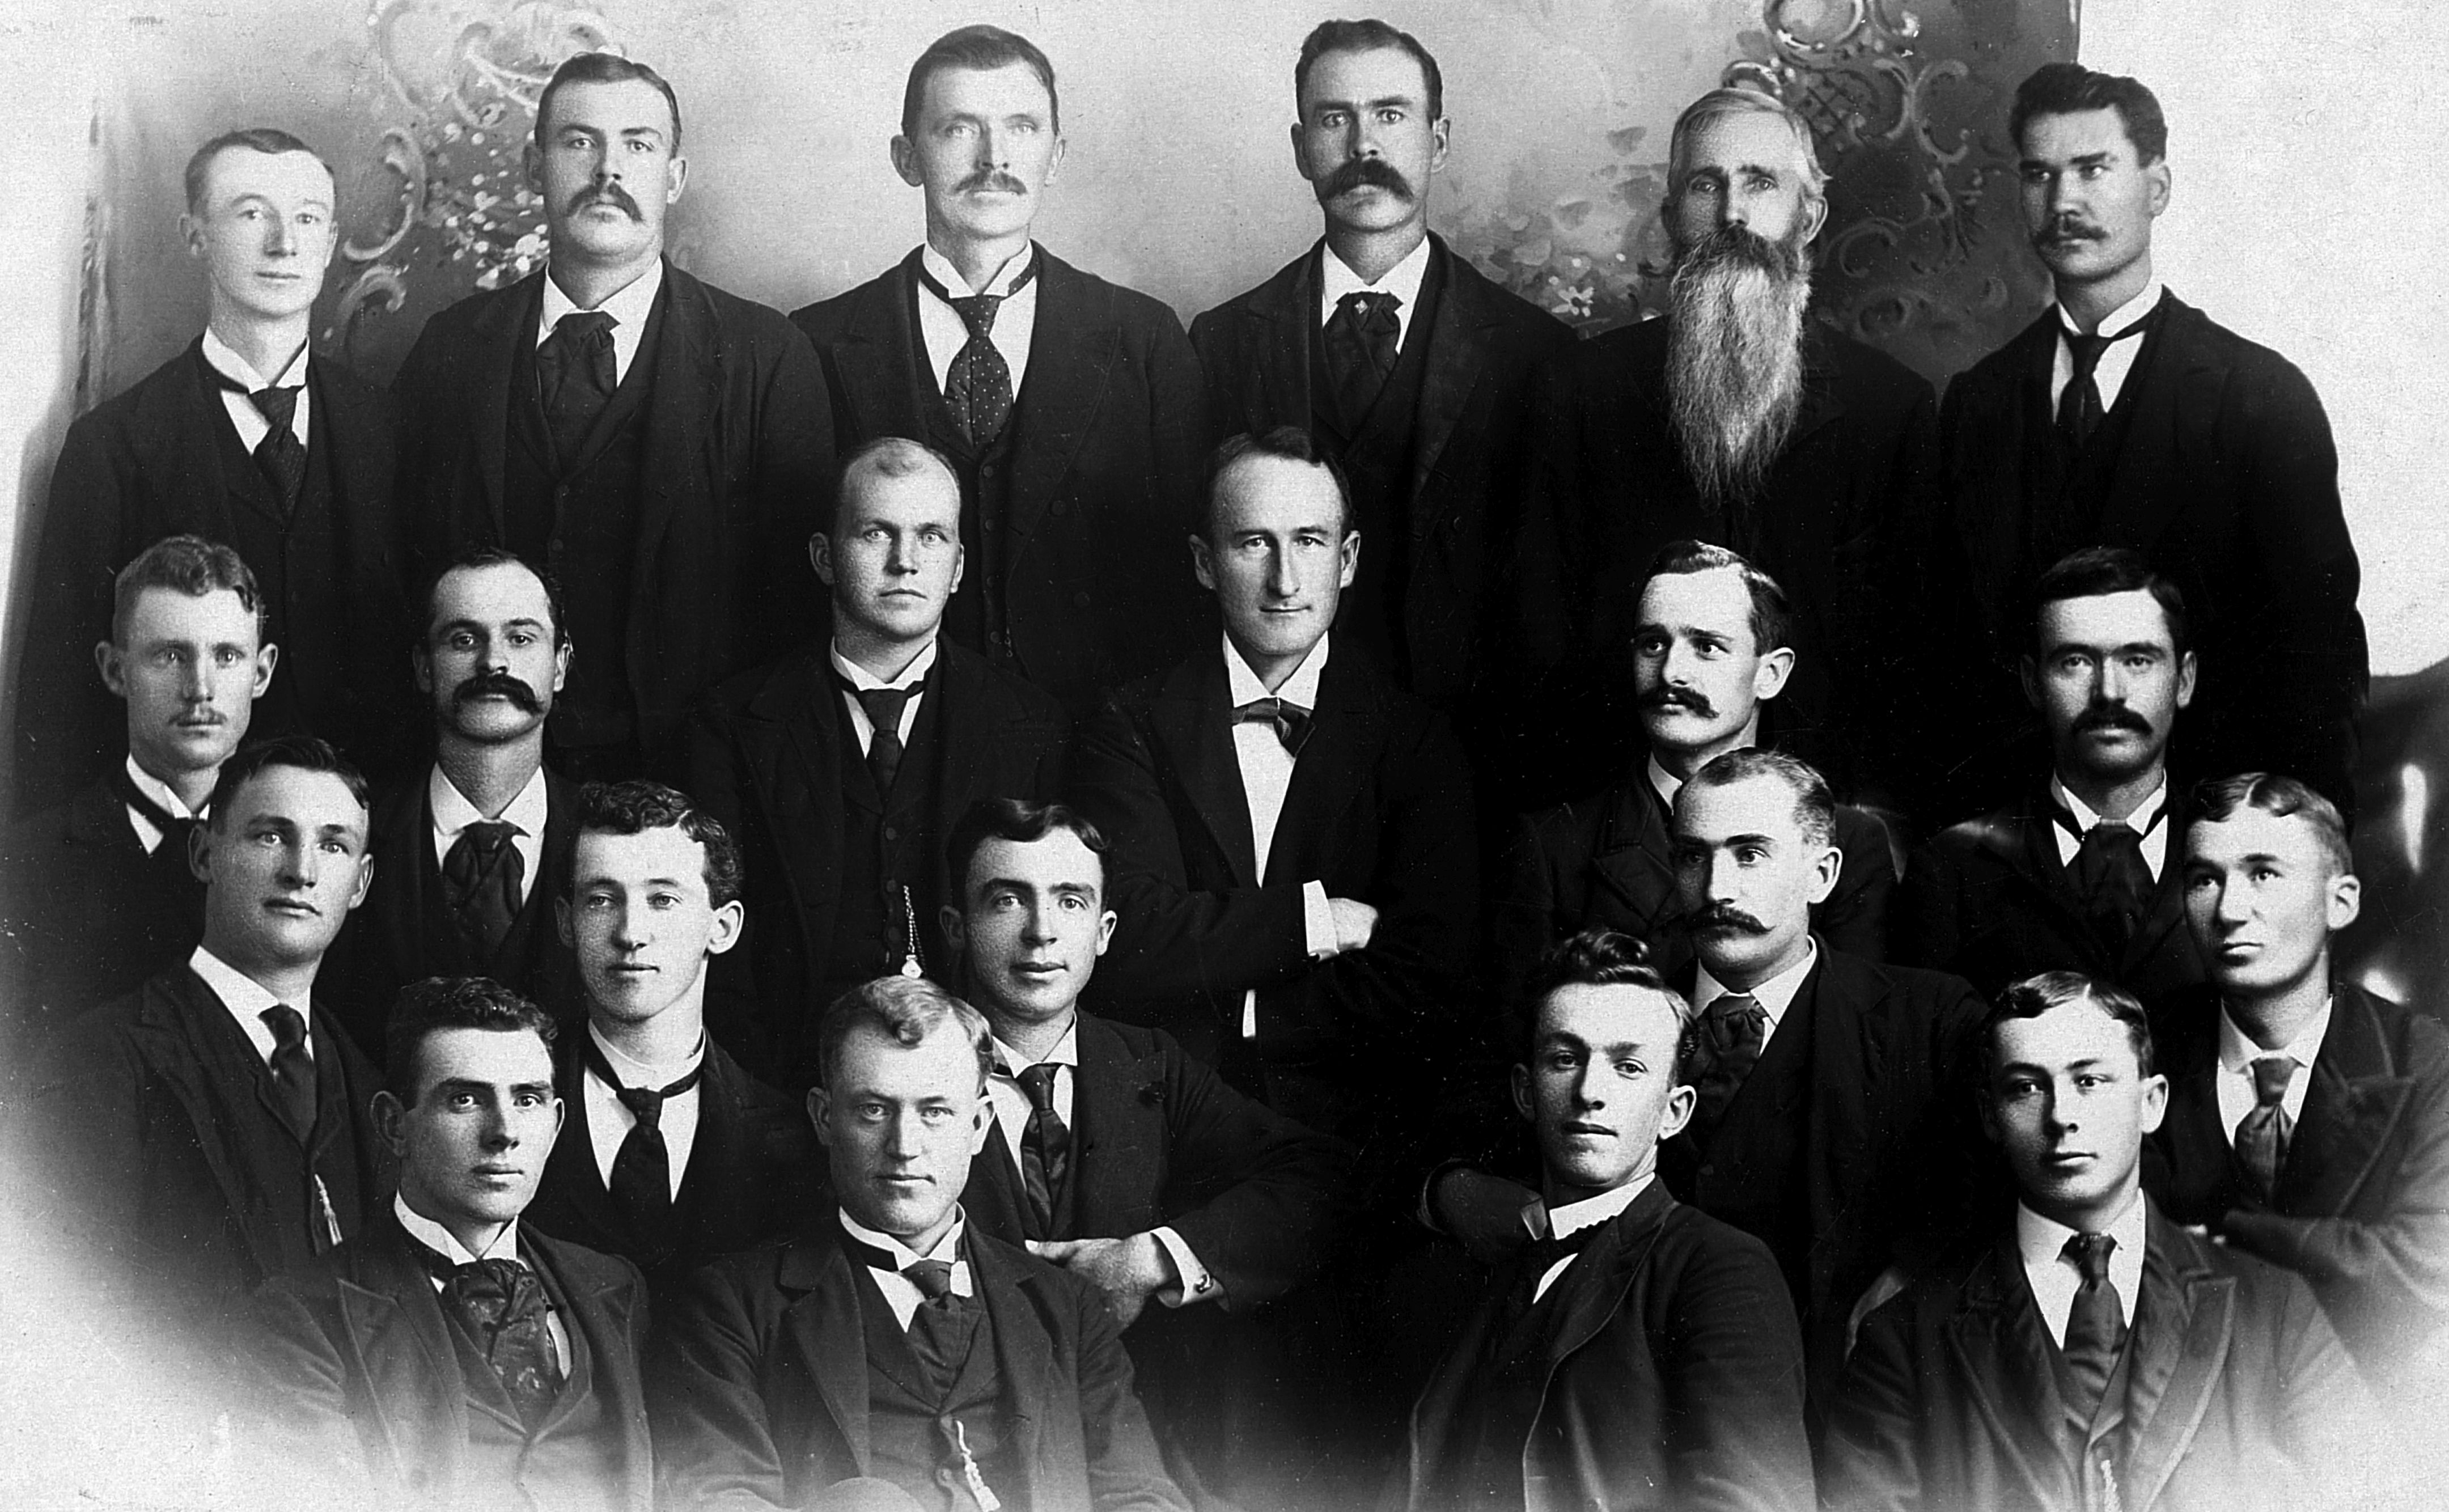 19 October 1895 - North Alabama Conference